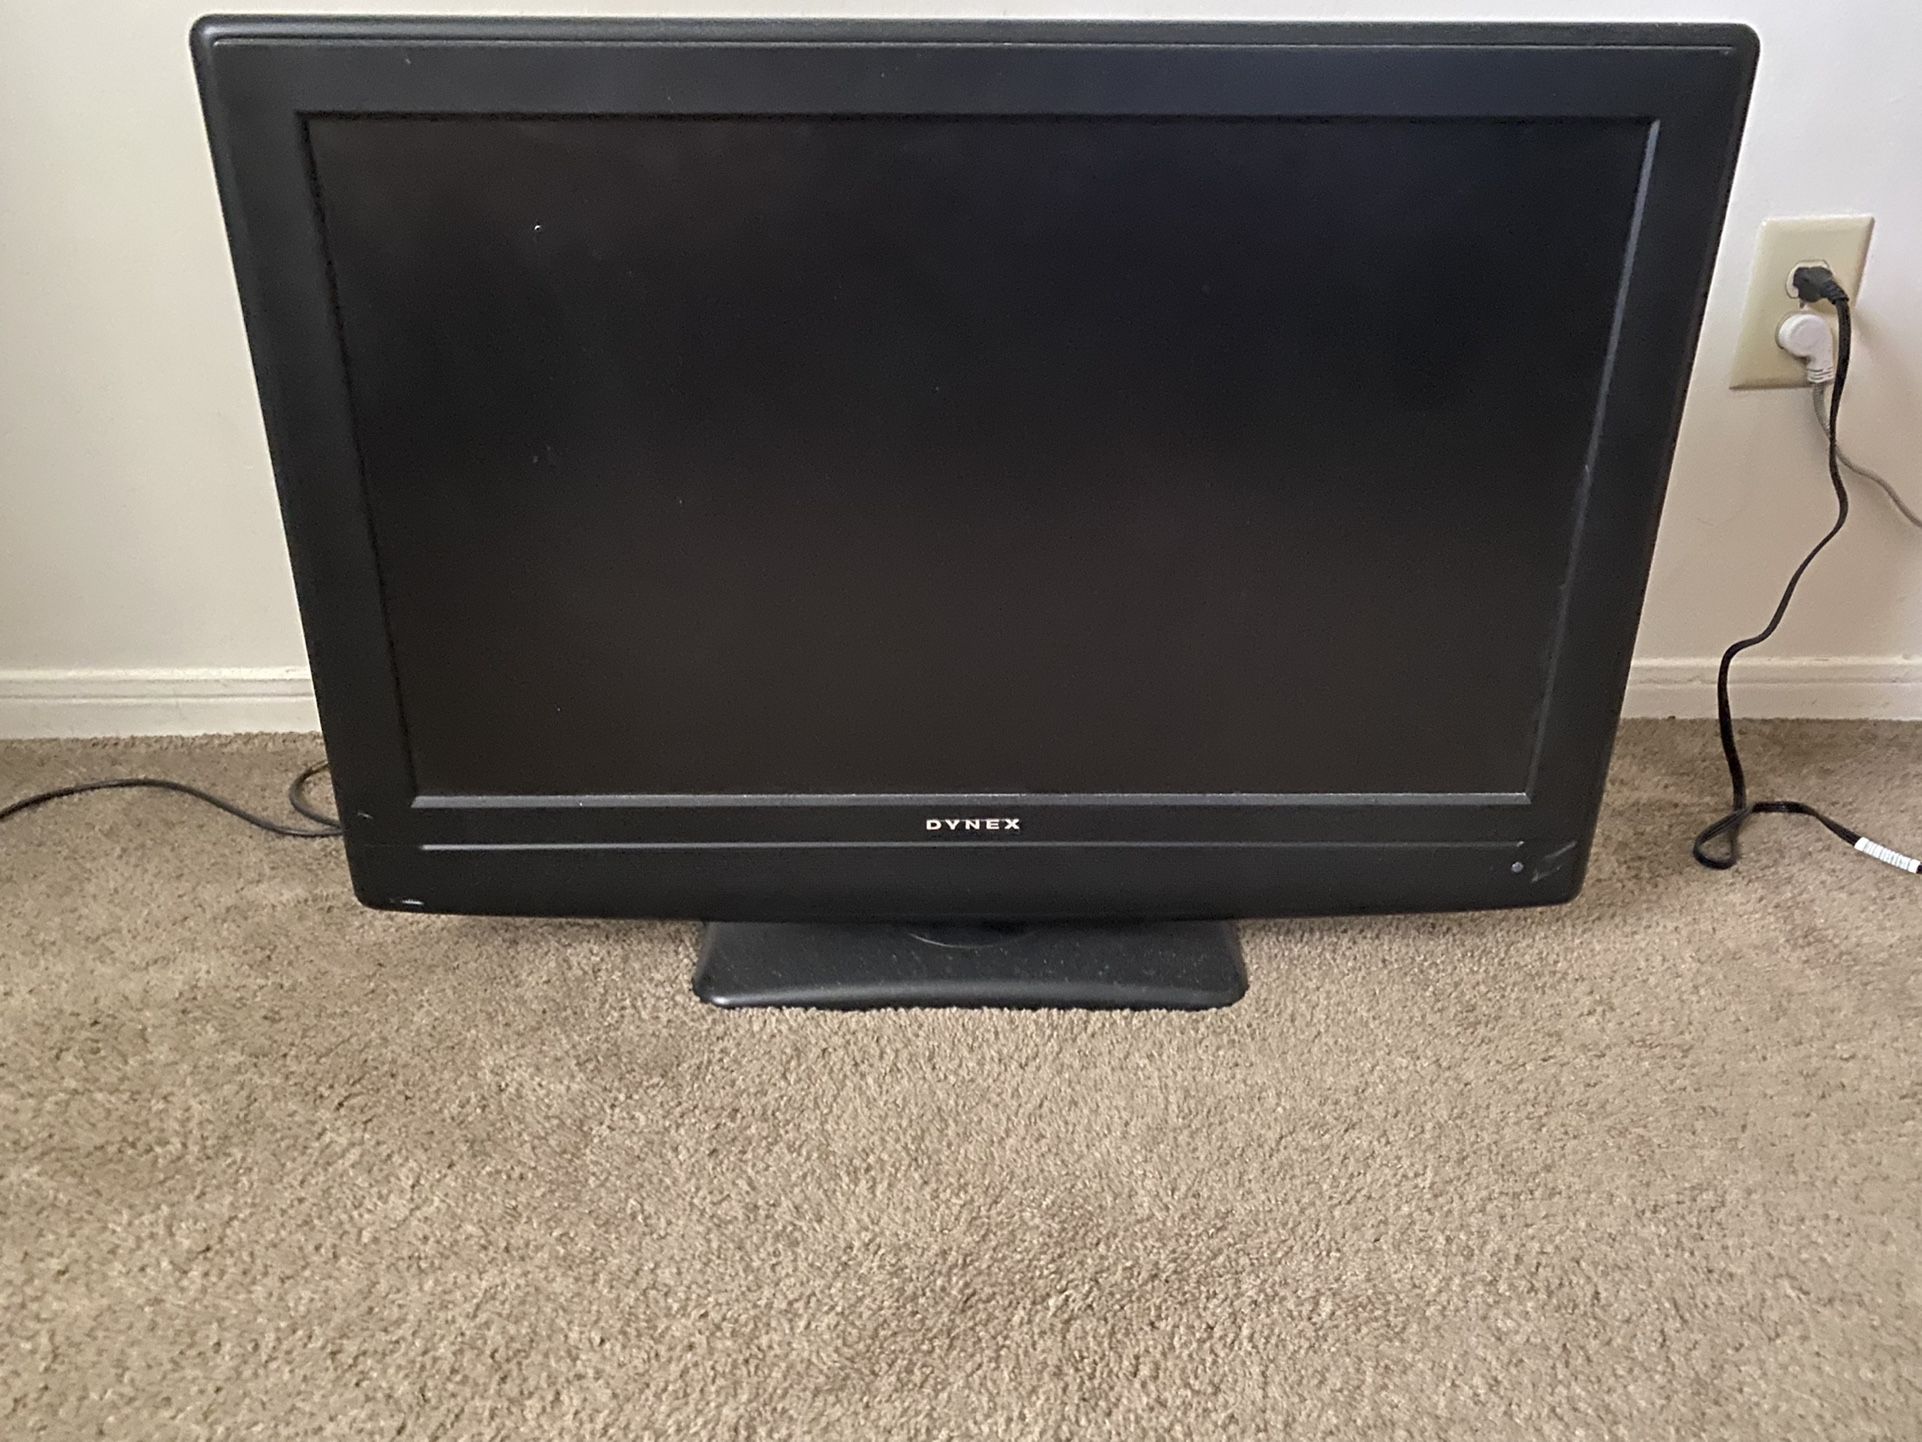 Dynex 32” Inch Tv for $50